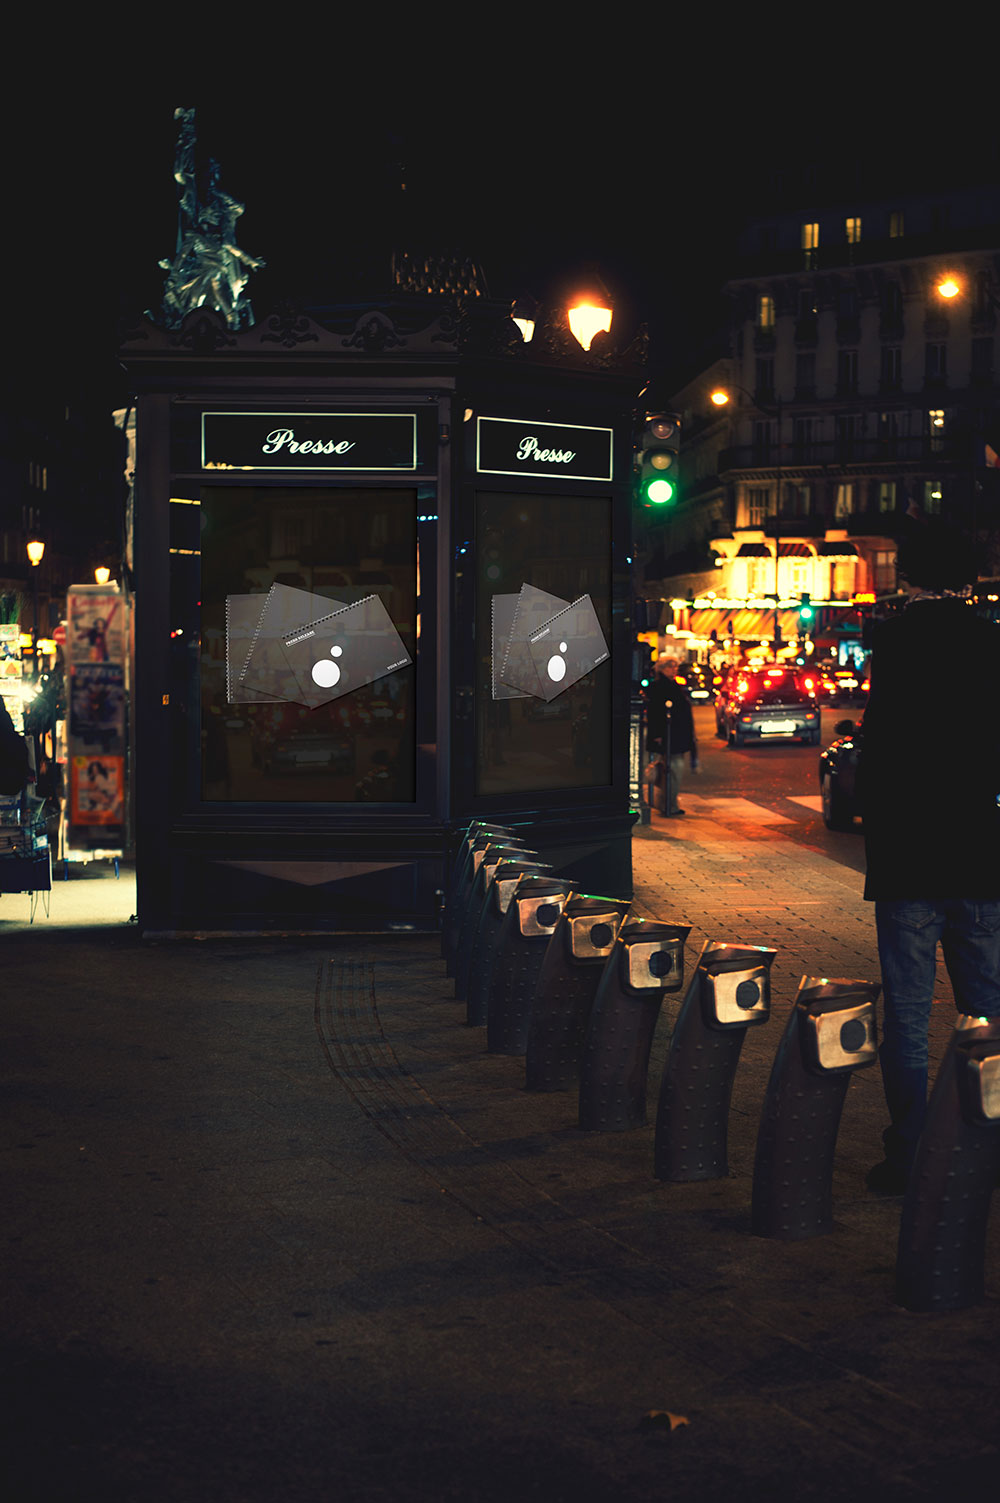 kiosque bus photorealistic cartaz maquete noite photoshop psd